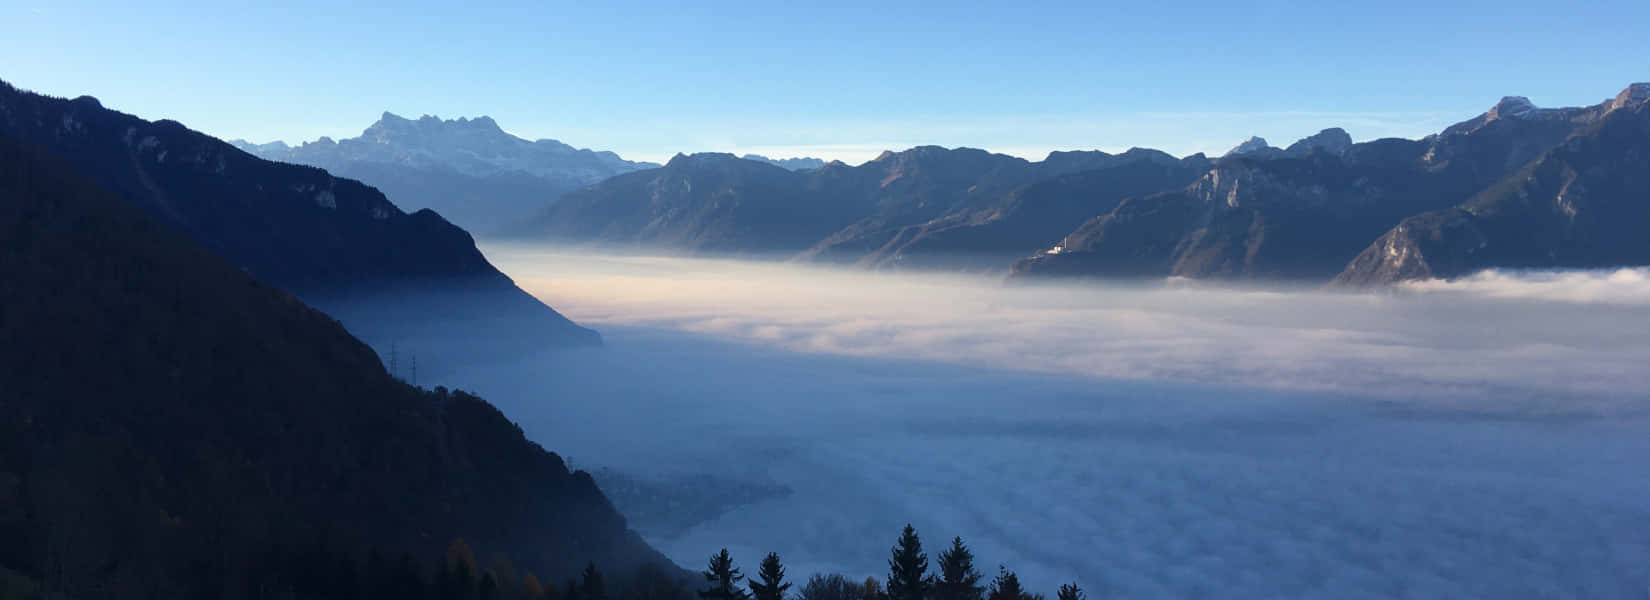 Misty Mountain Valley Panorama Wallpaper